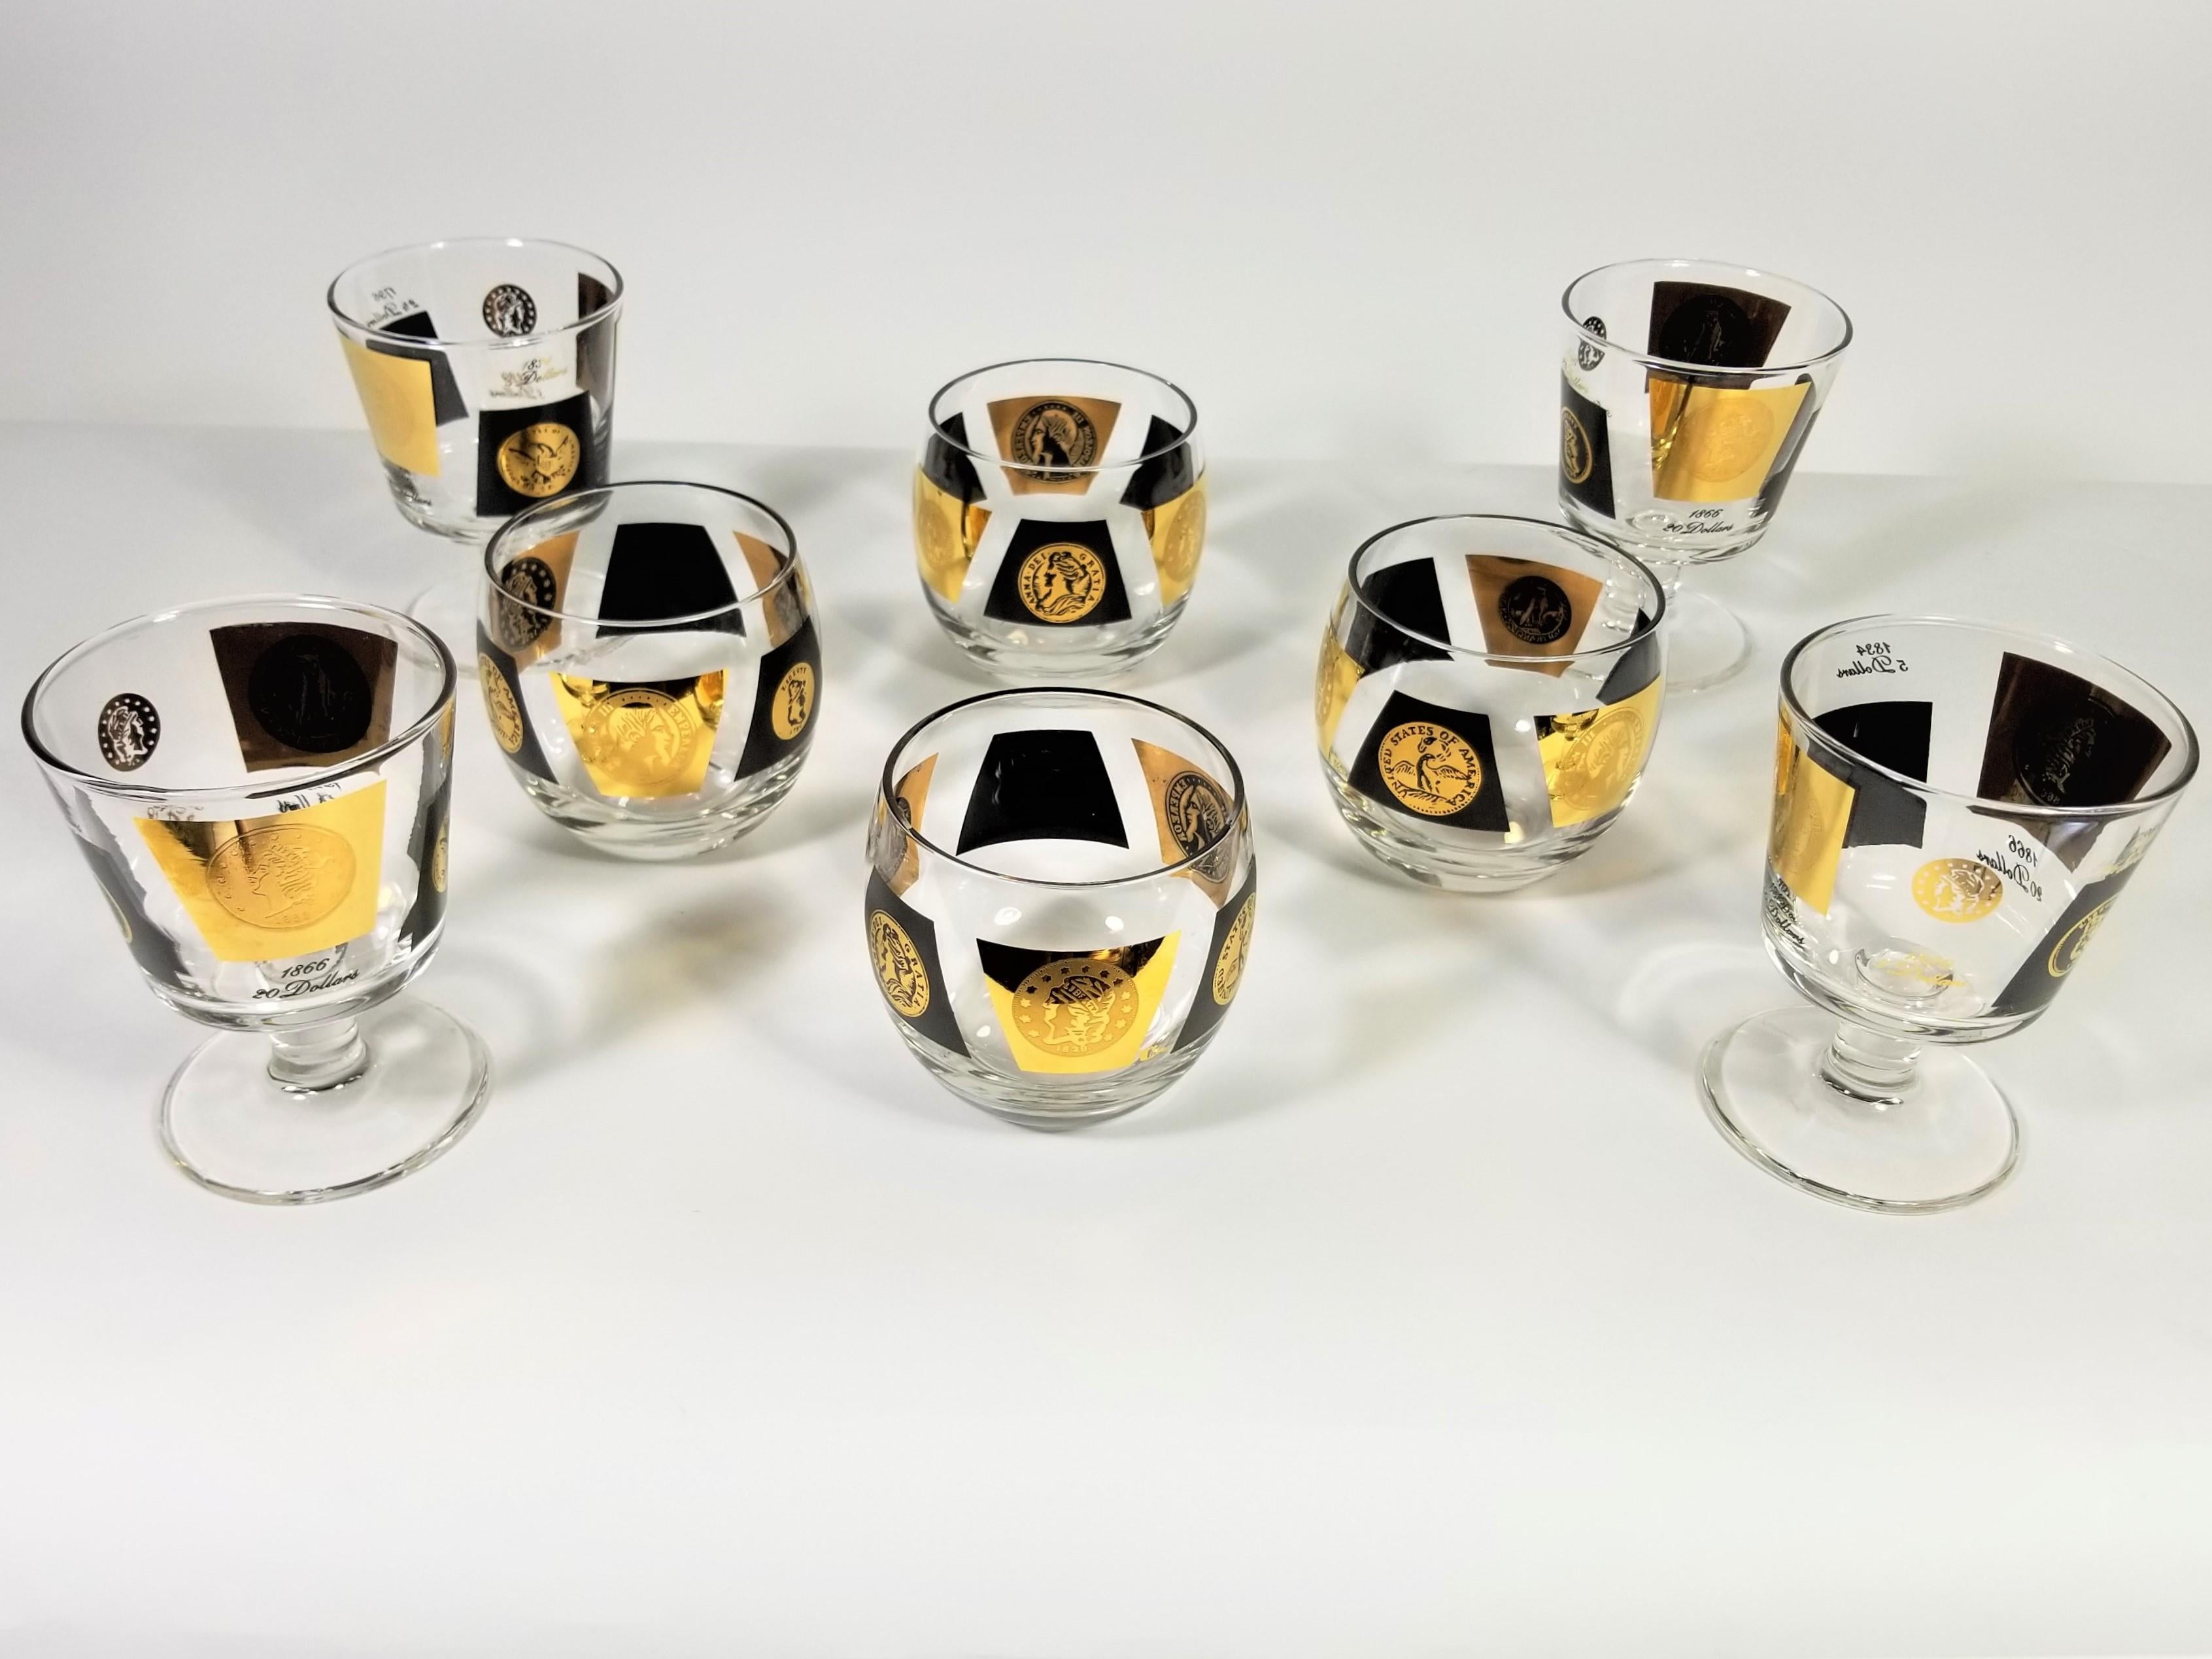 Cera 22-karat signed cocktail glasses. Classic black and gold coin motif. 4 roly poly rocks glasses and 4 stemmed martini/goblet glasses.

Measurements for glasses:
Roly poly diameter 3.5 inches
Roly poly height 3.25 inches

Stemmed